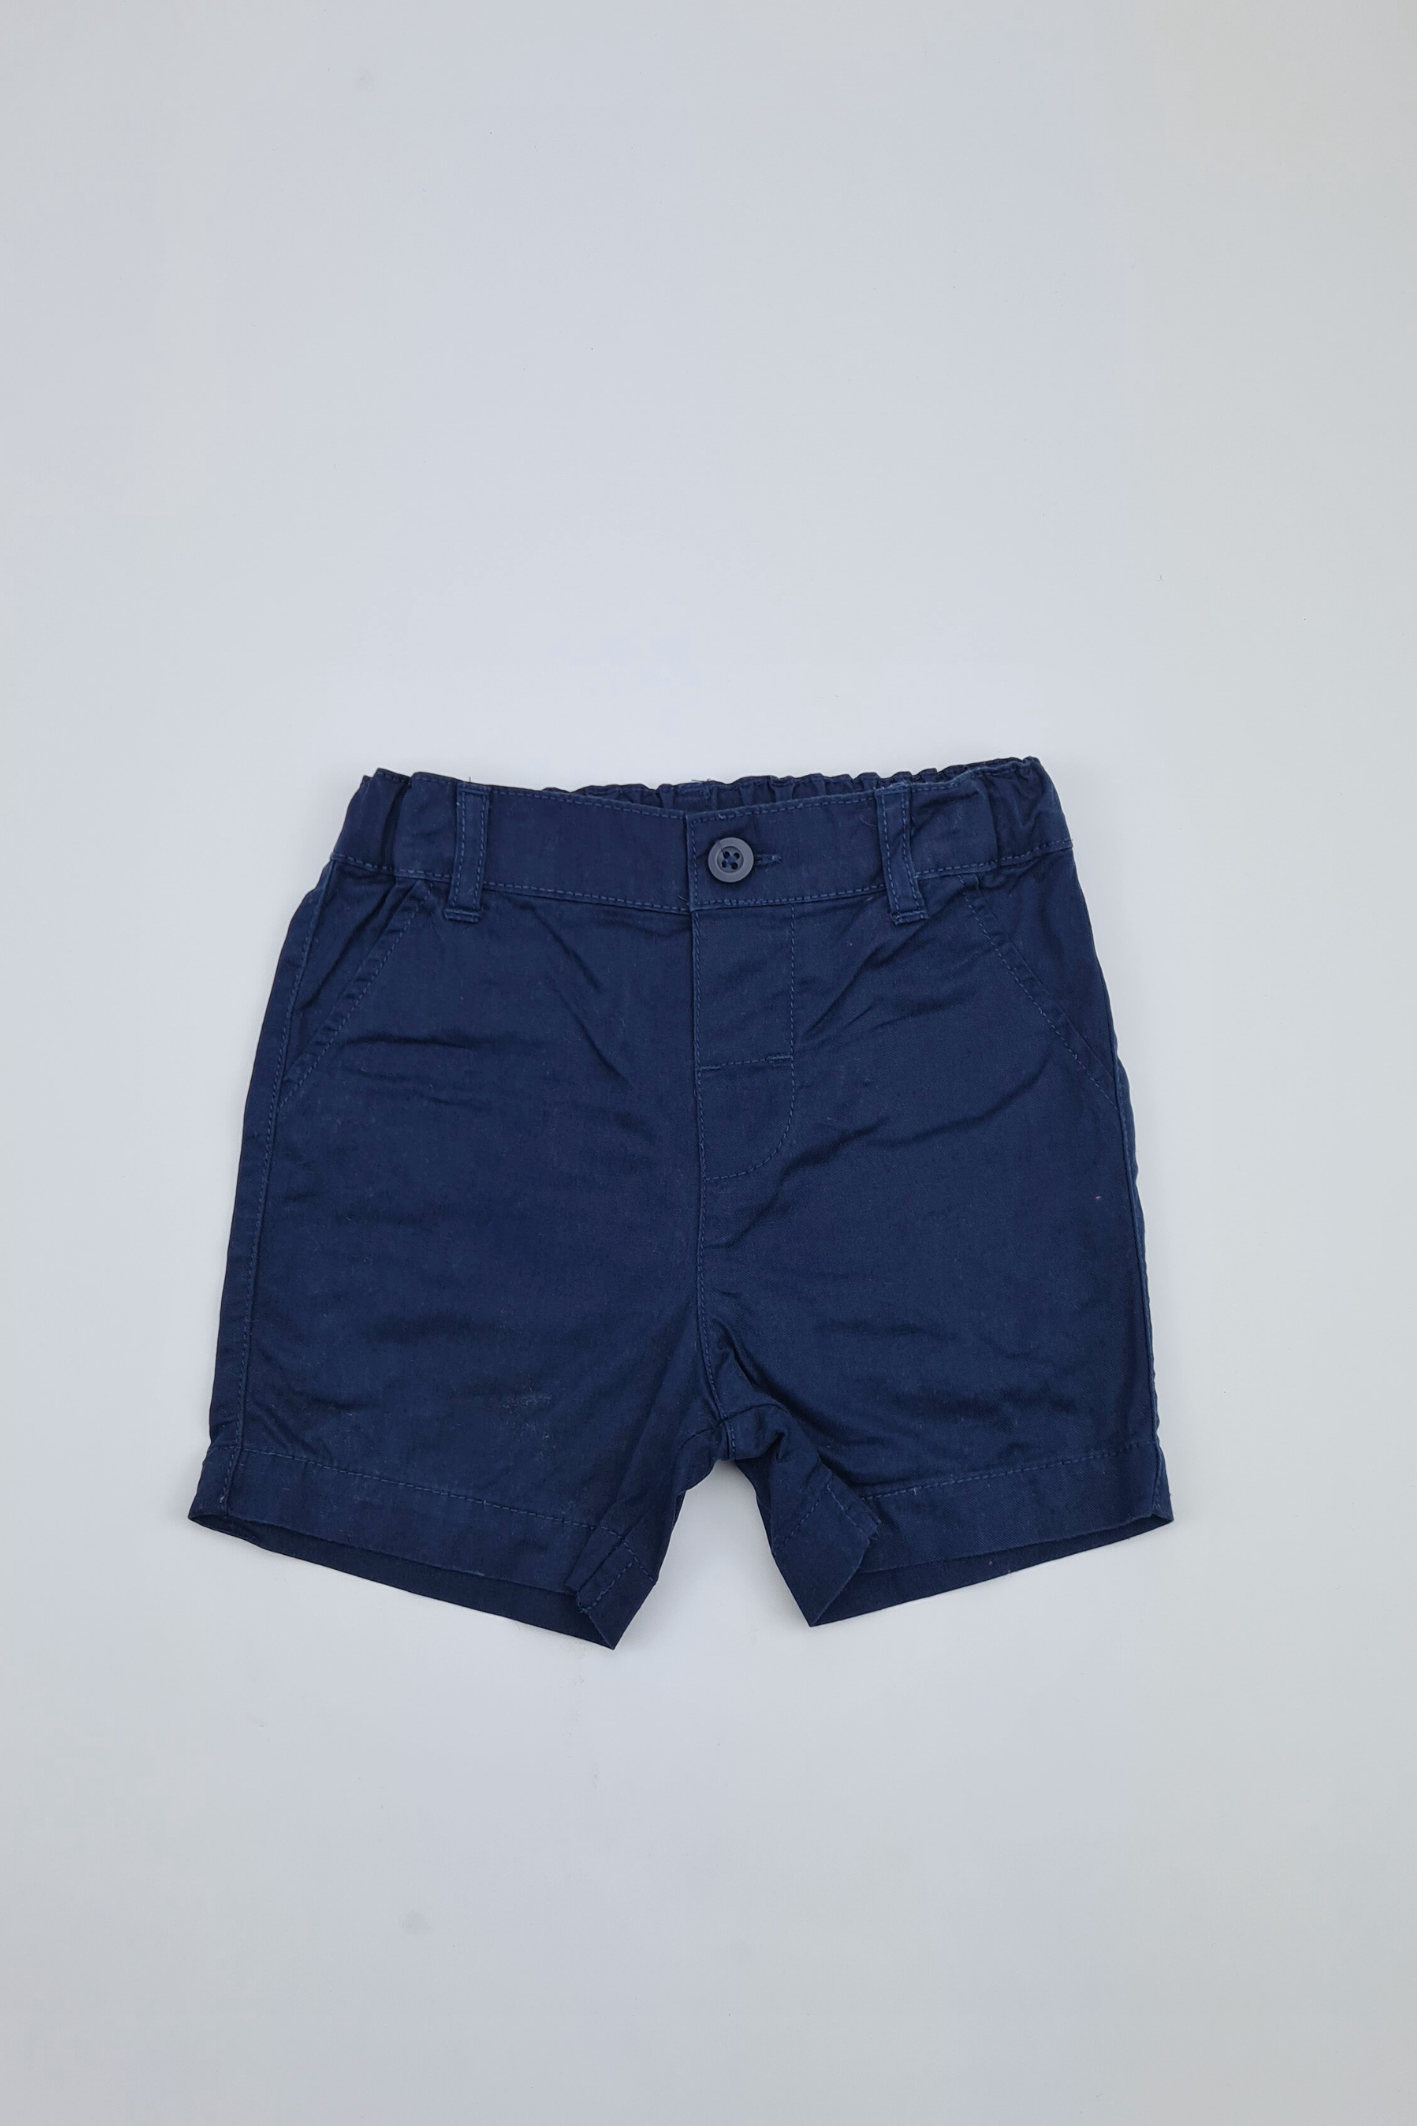 9-12m - Navy Blue Shorts (Primark)